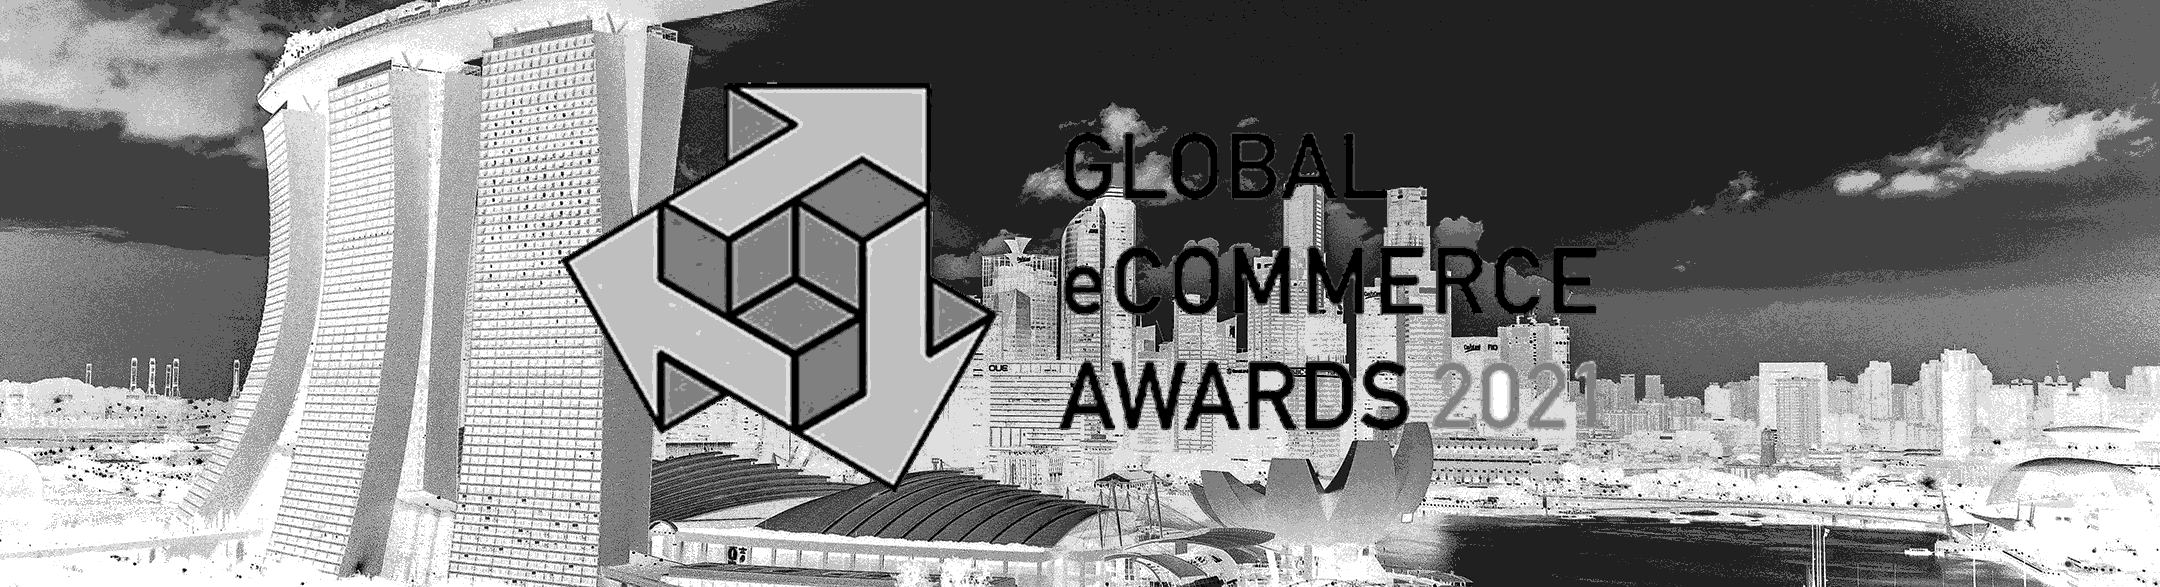 TIDAL DIGITAL - GLOBAL ECOMMERCE AWARDS